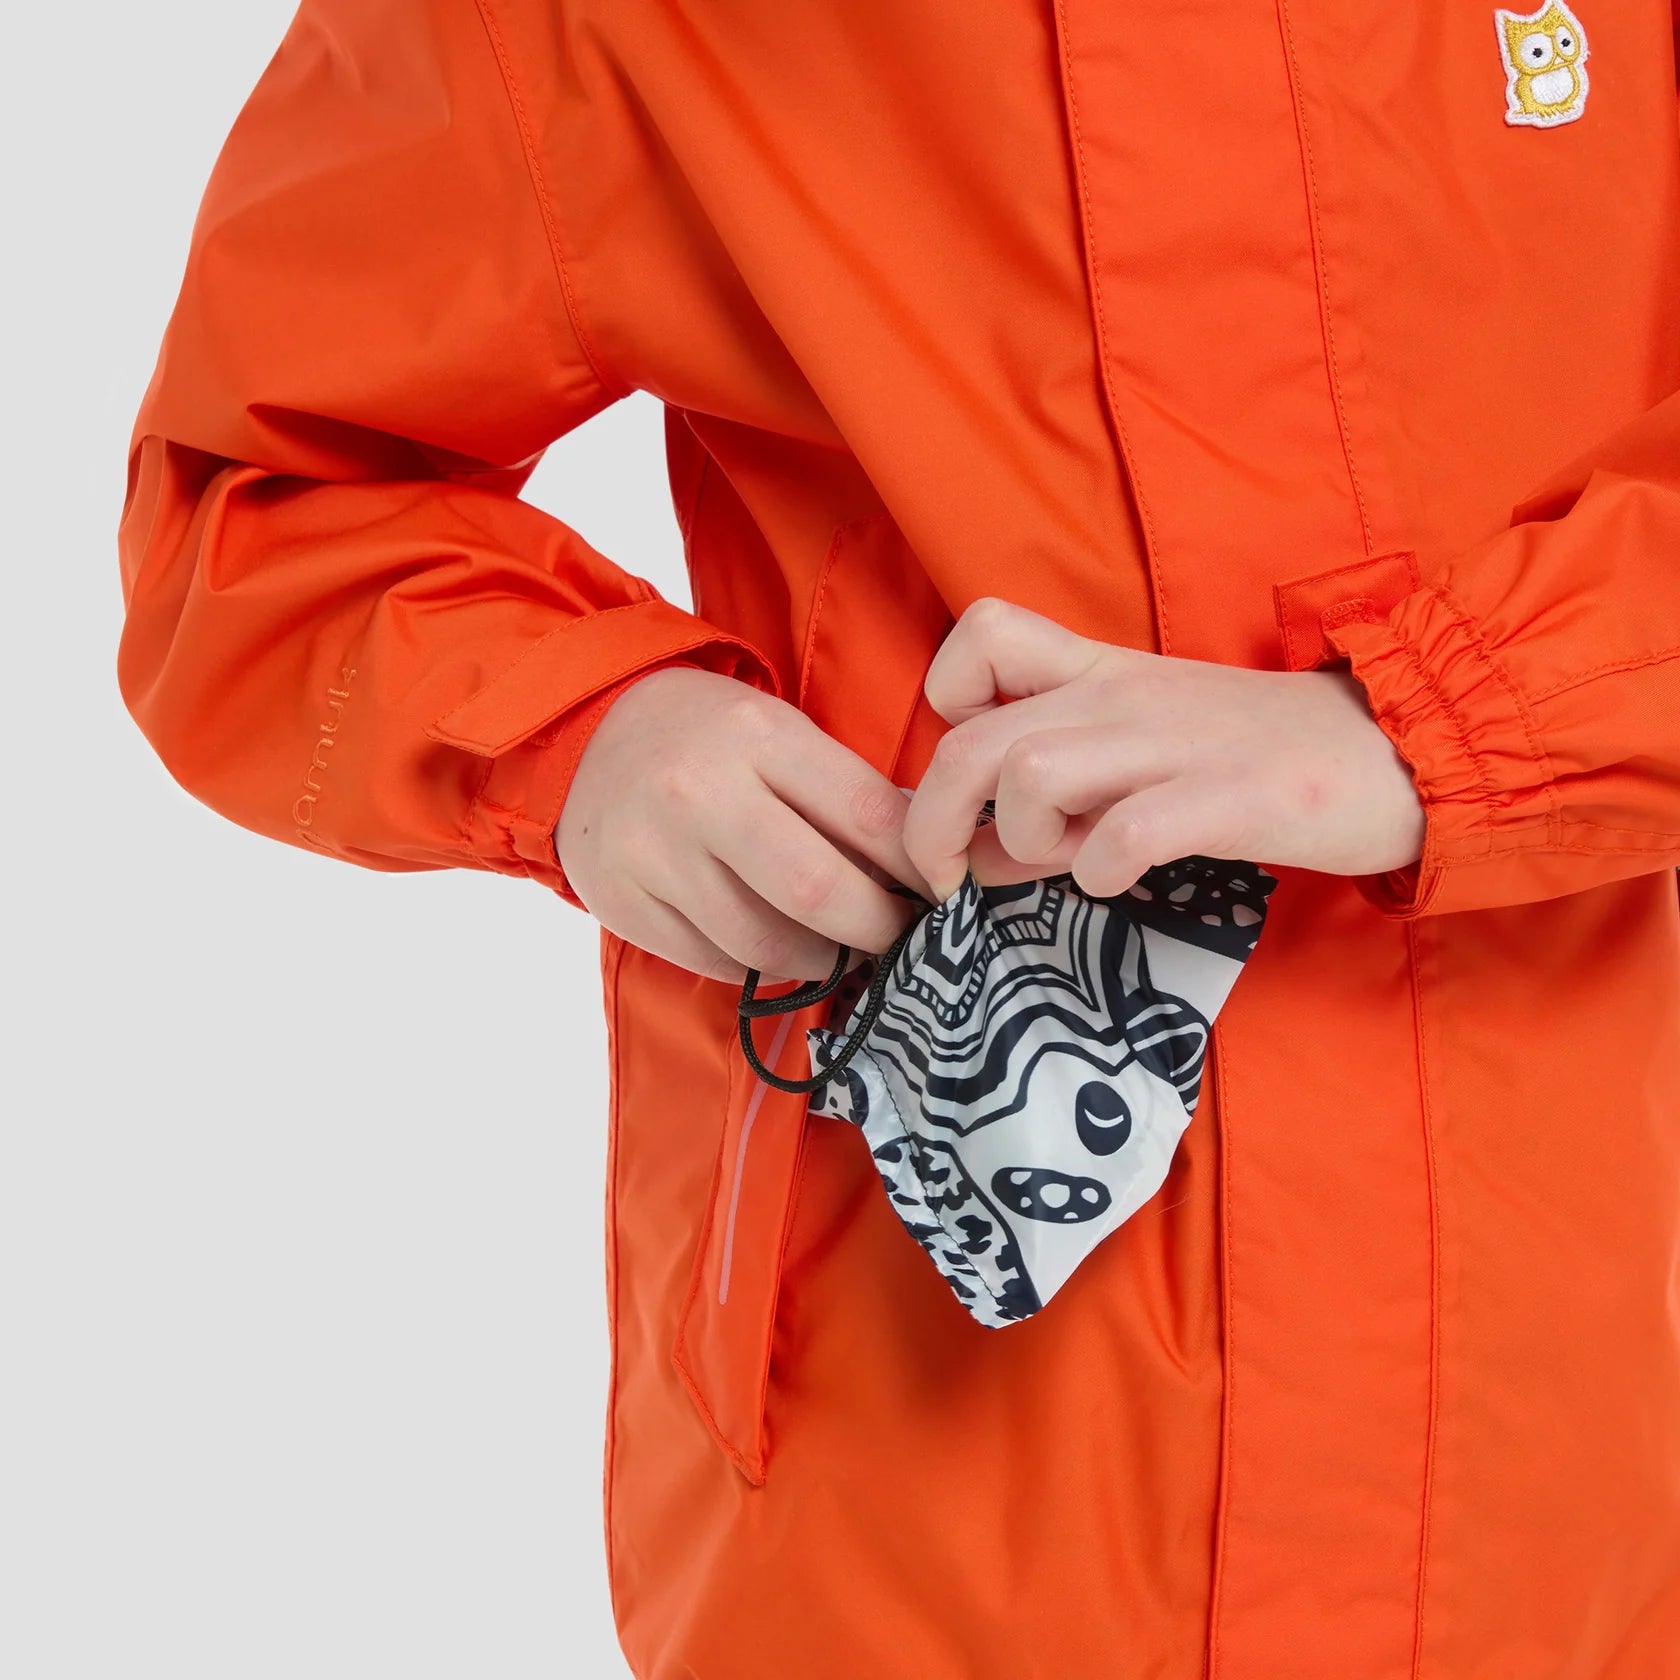 Chip Rain Jacket "Livingwall" – red orange